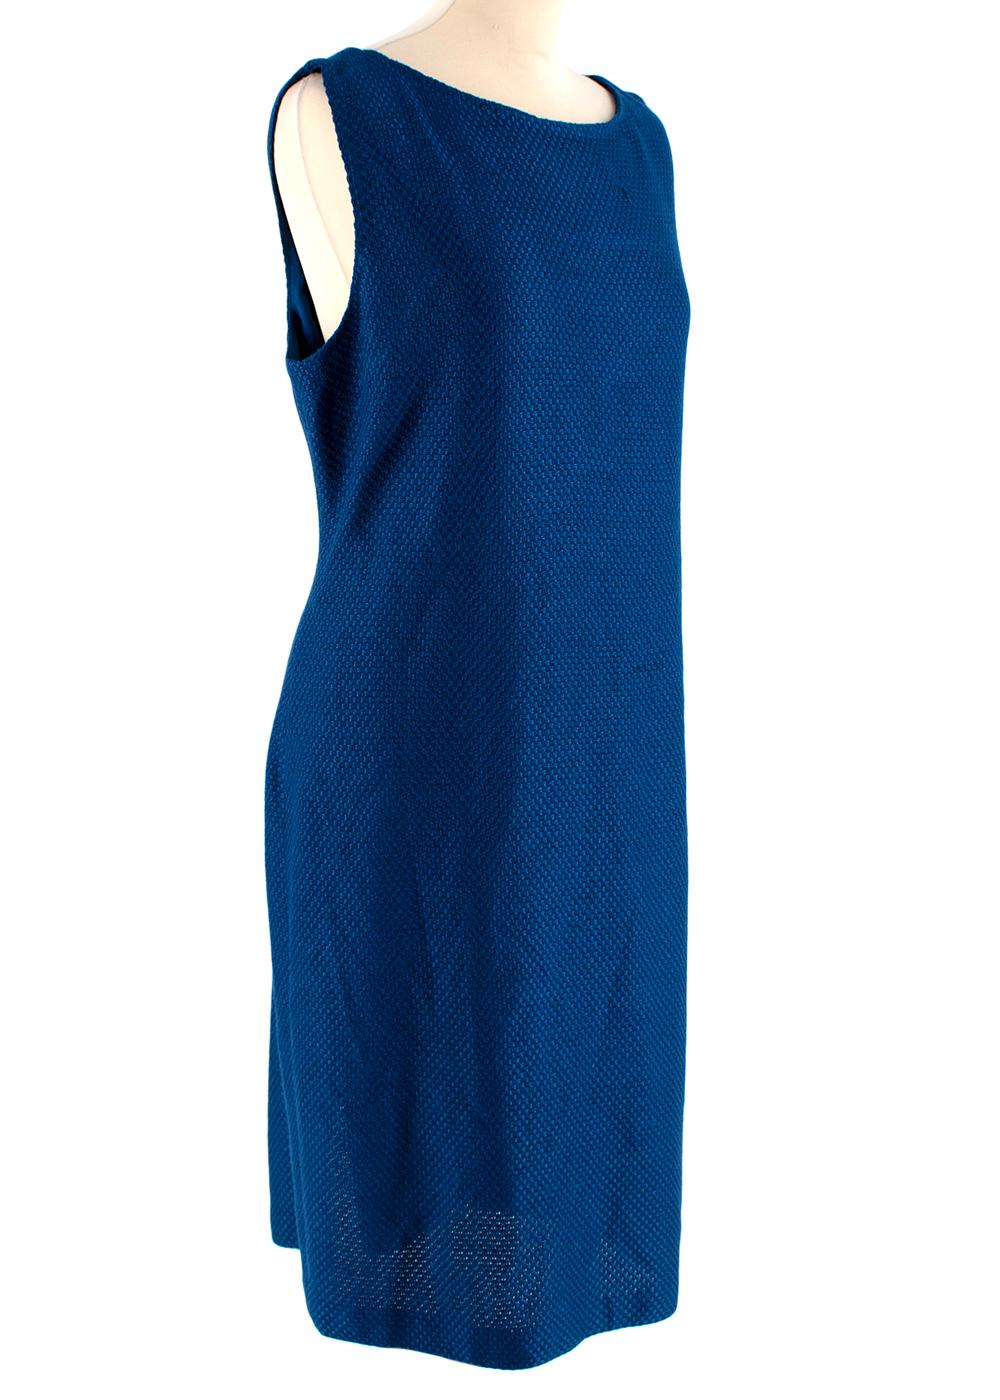 St John Blue Tweed Midi Dress 

- Blue tweed dress
- The sleeveless, midi dress has a classic, straight fit
- Zip lock fastening at the back 
- Small split at the bottom back 

Materials:
50 % rayon 50% wool; facing: 92% silk,8% spandex 
Dry